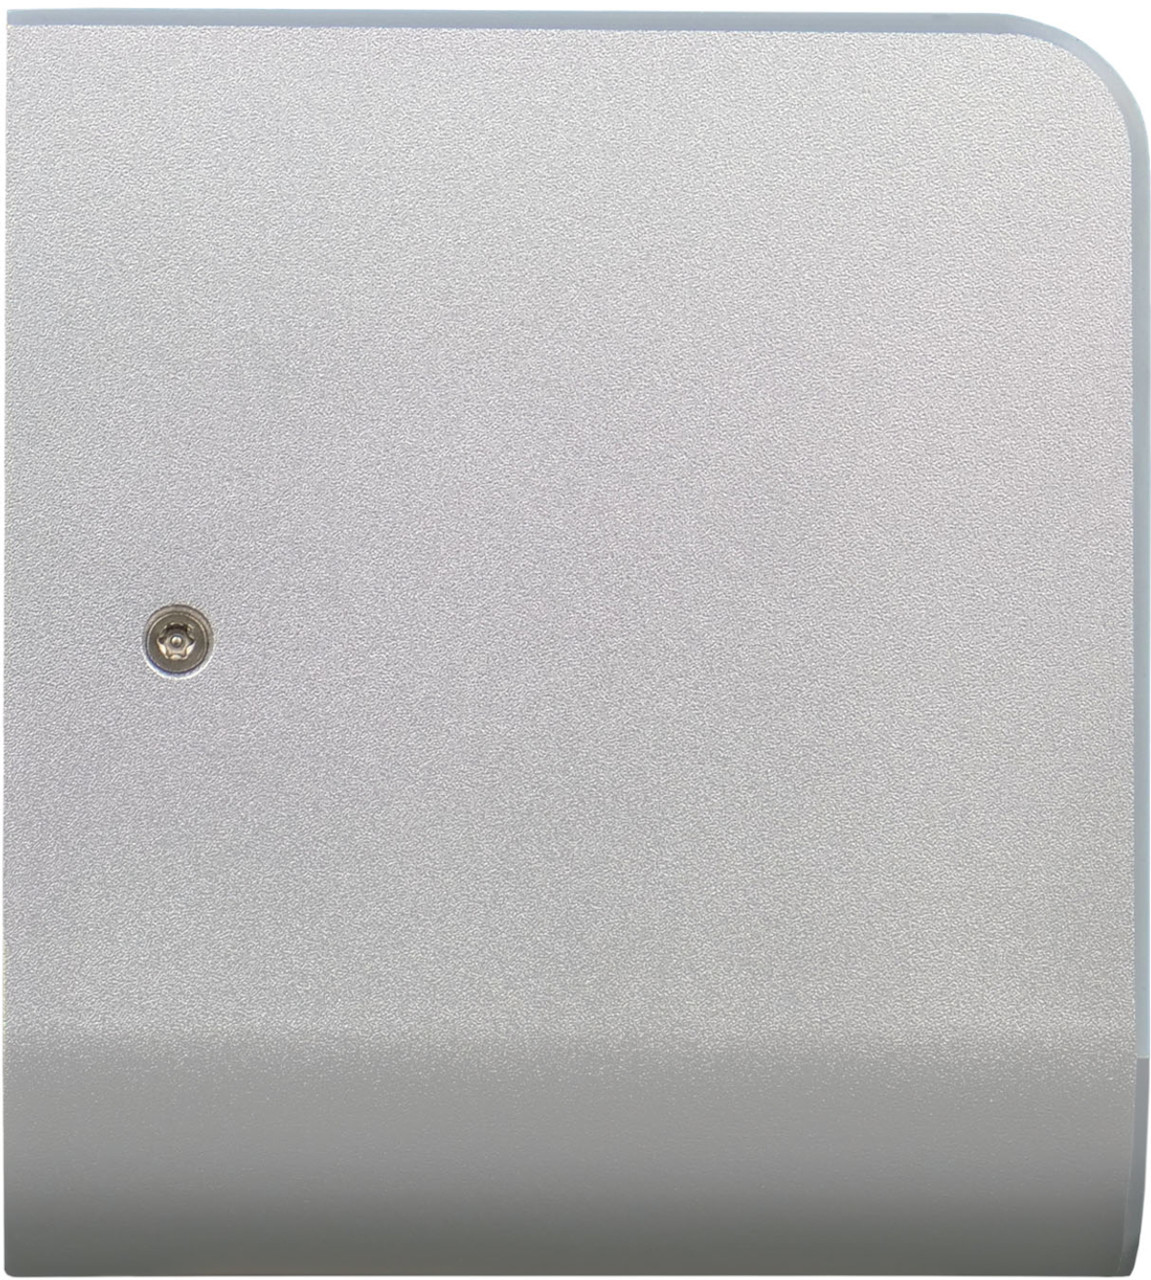 HD-D380PLUS-S - Diamond Hand Dryer PURE - Silver - Side Profile